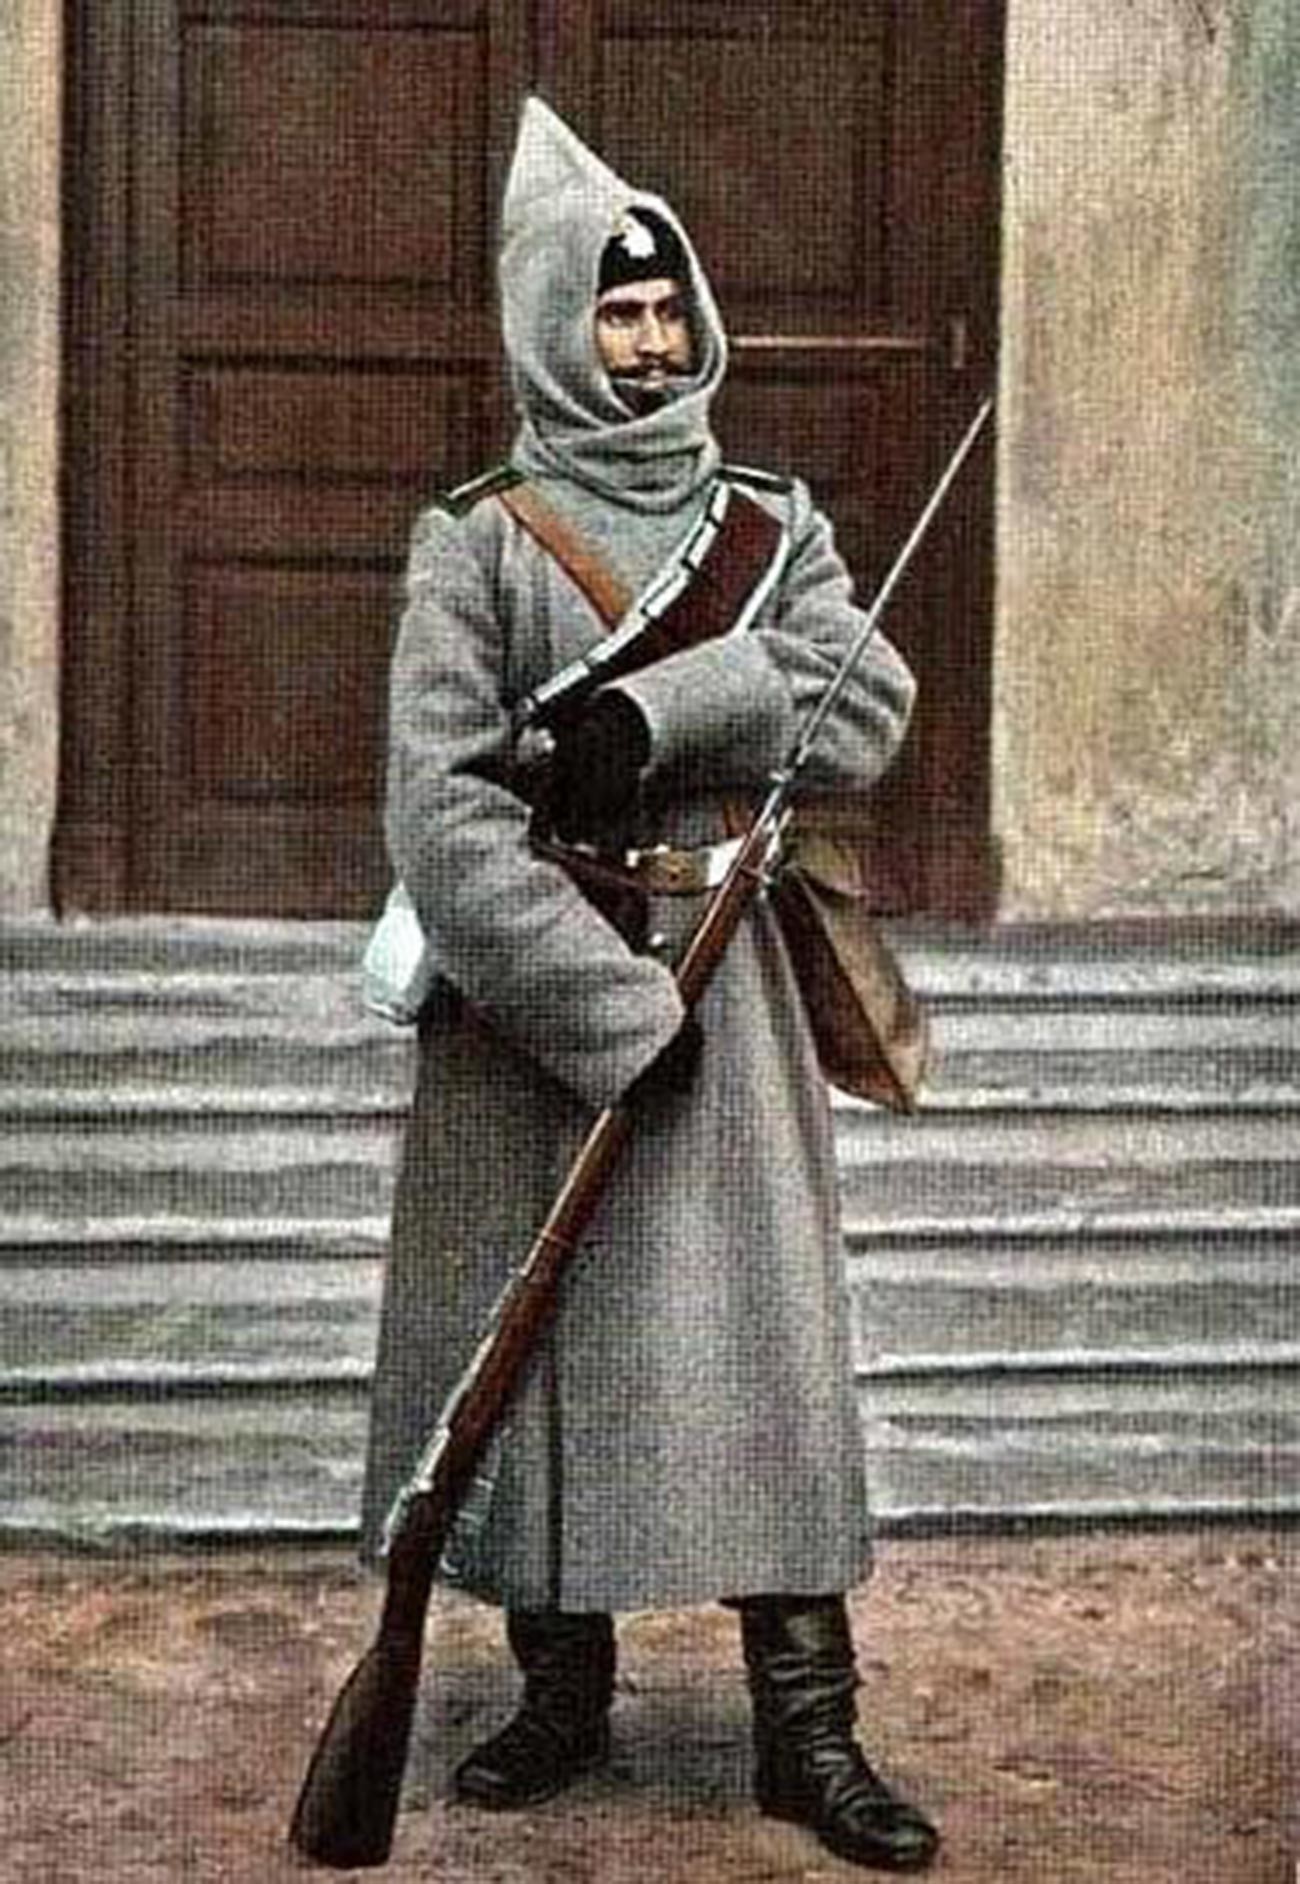 Bashlyk as a part of a historical military uniform.